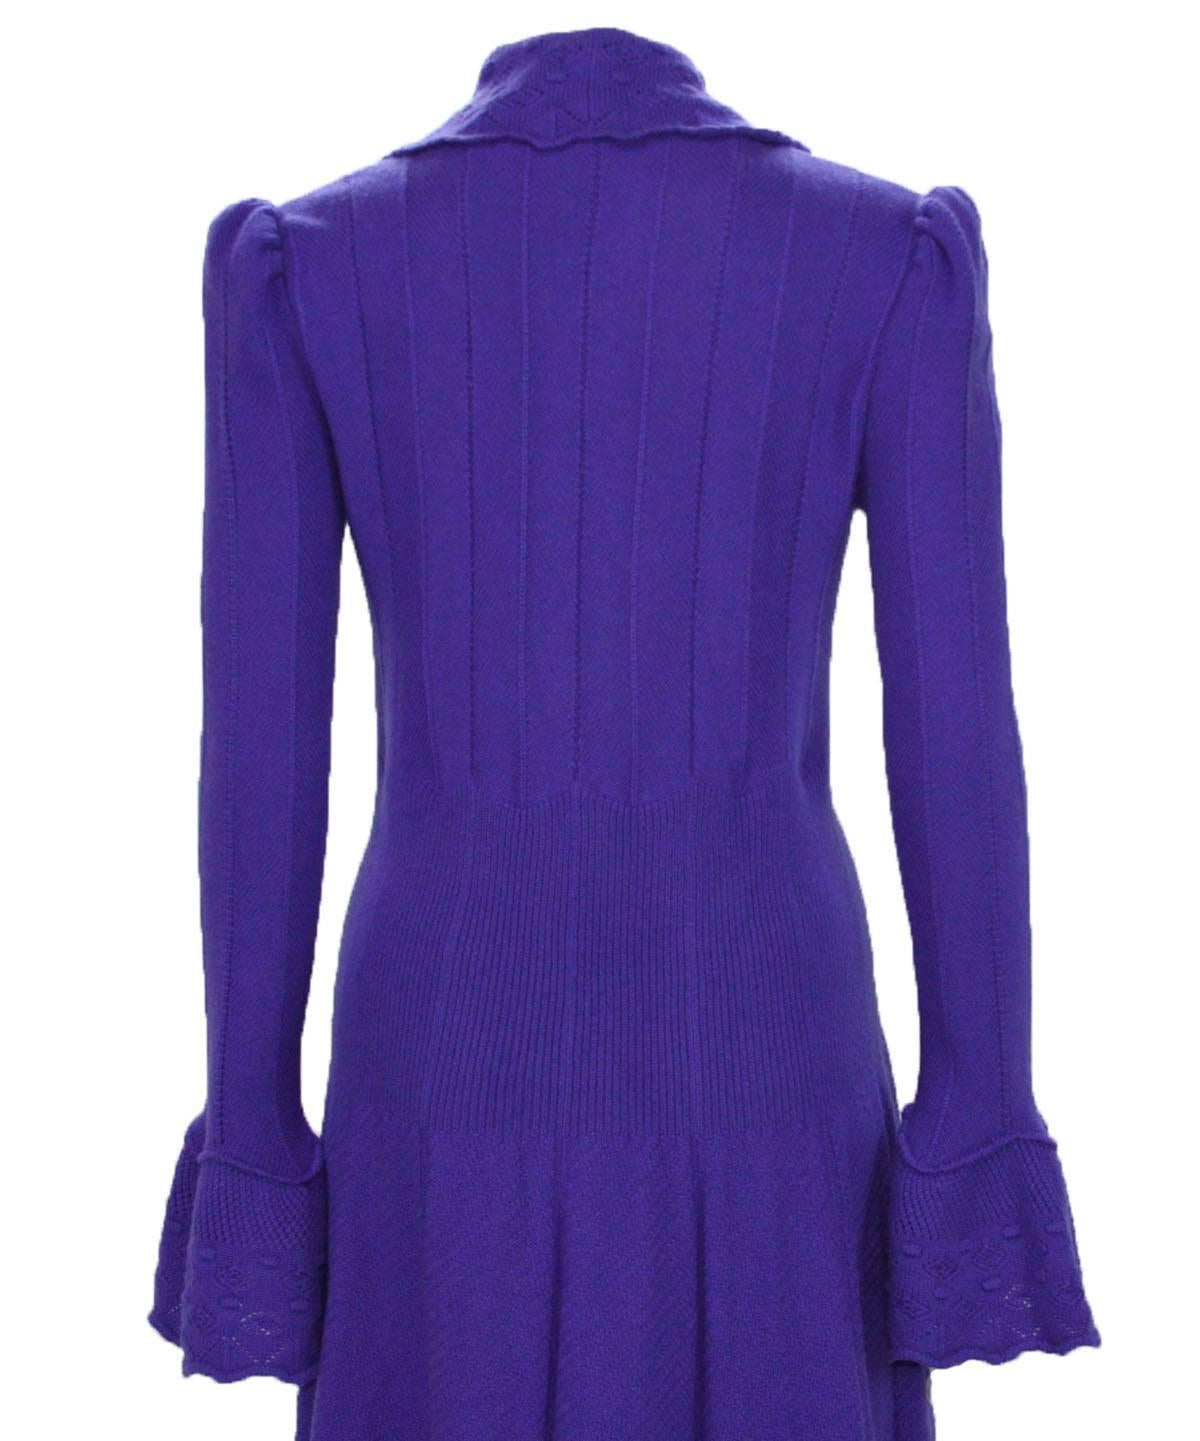 New $3090 Oscar de la Renta 100% Cashmere Ruffled Purple Long Cardigan Coat 2